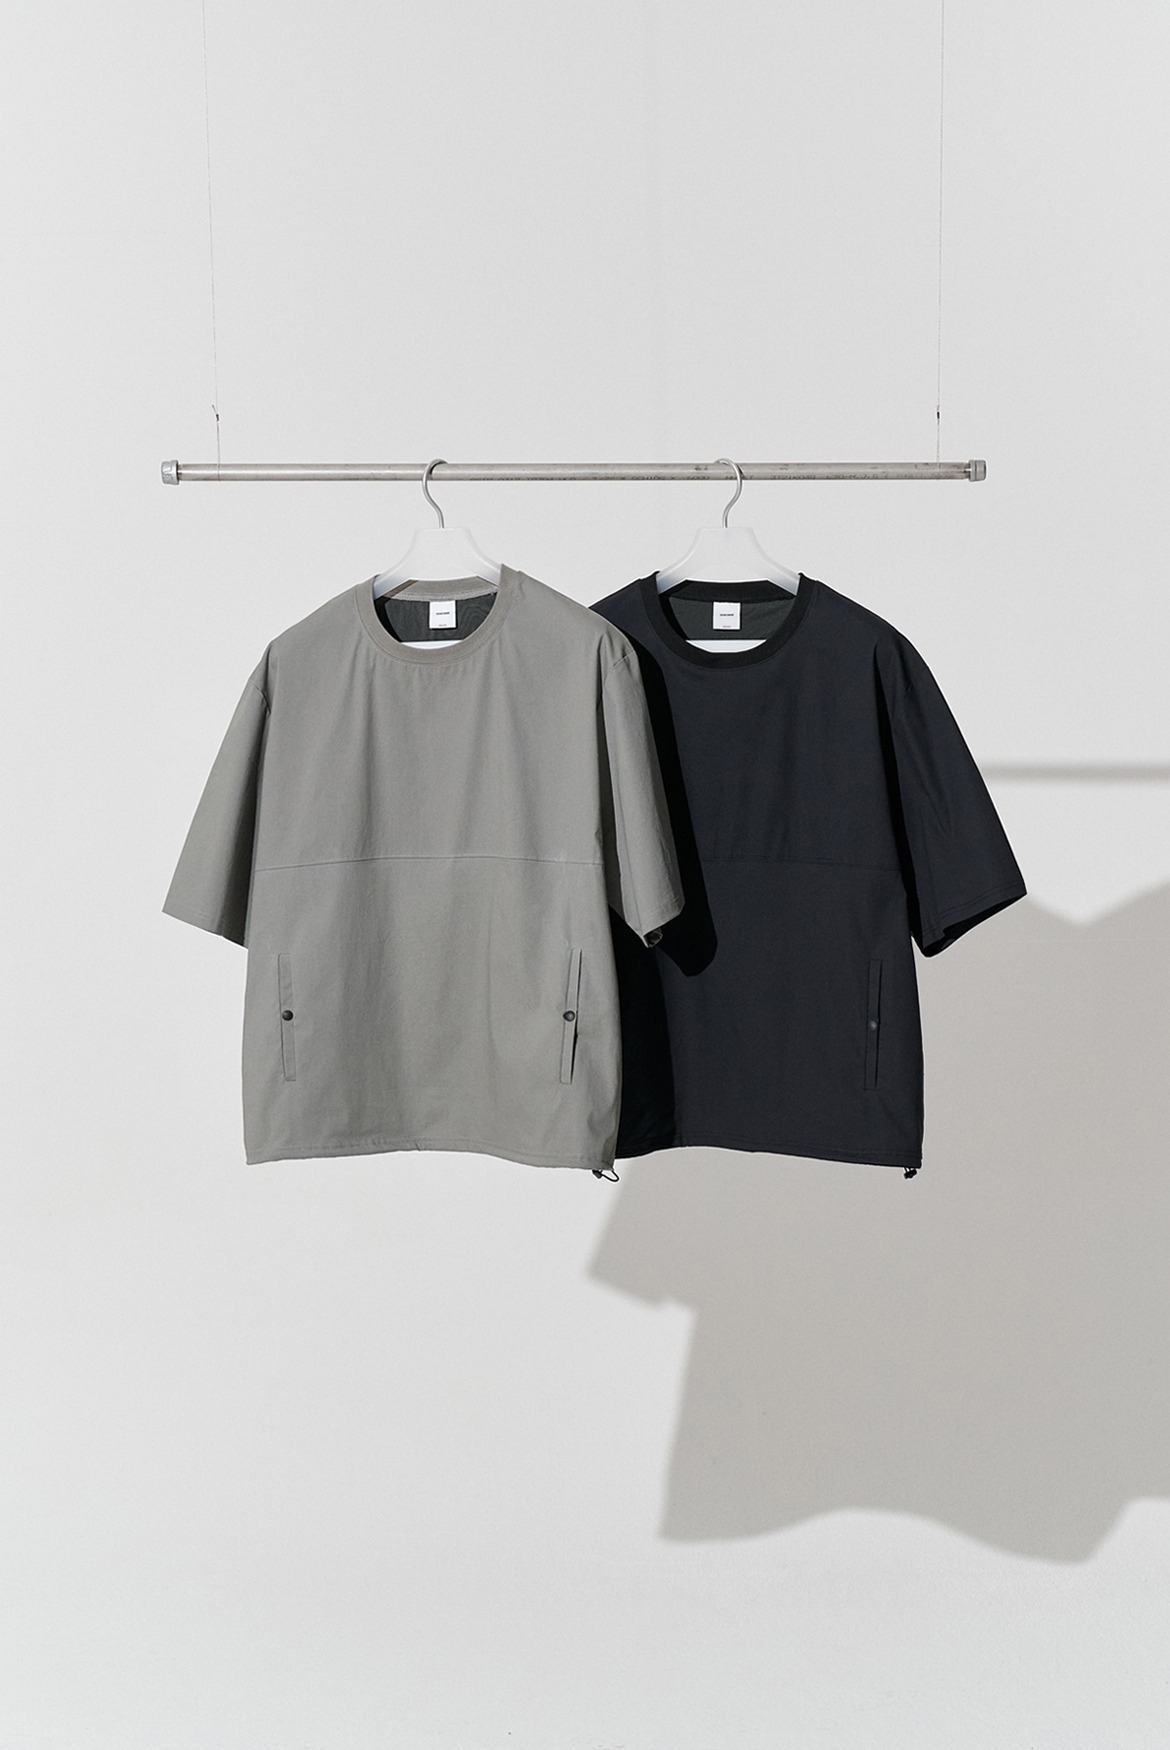 Nylon String Half Shirts [2 Colors]